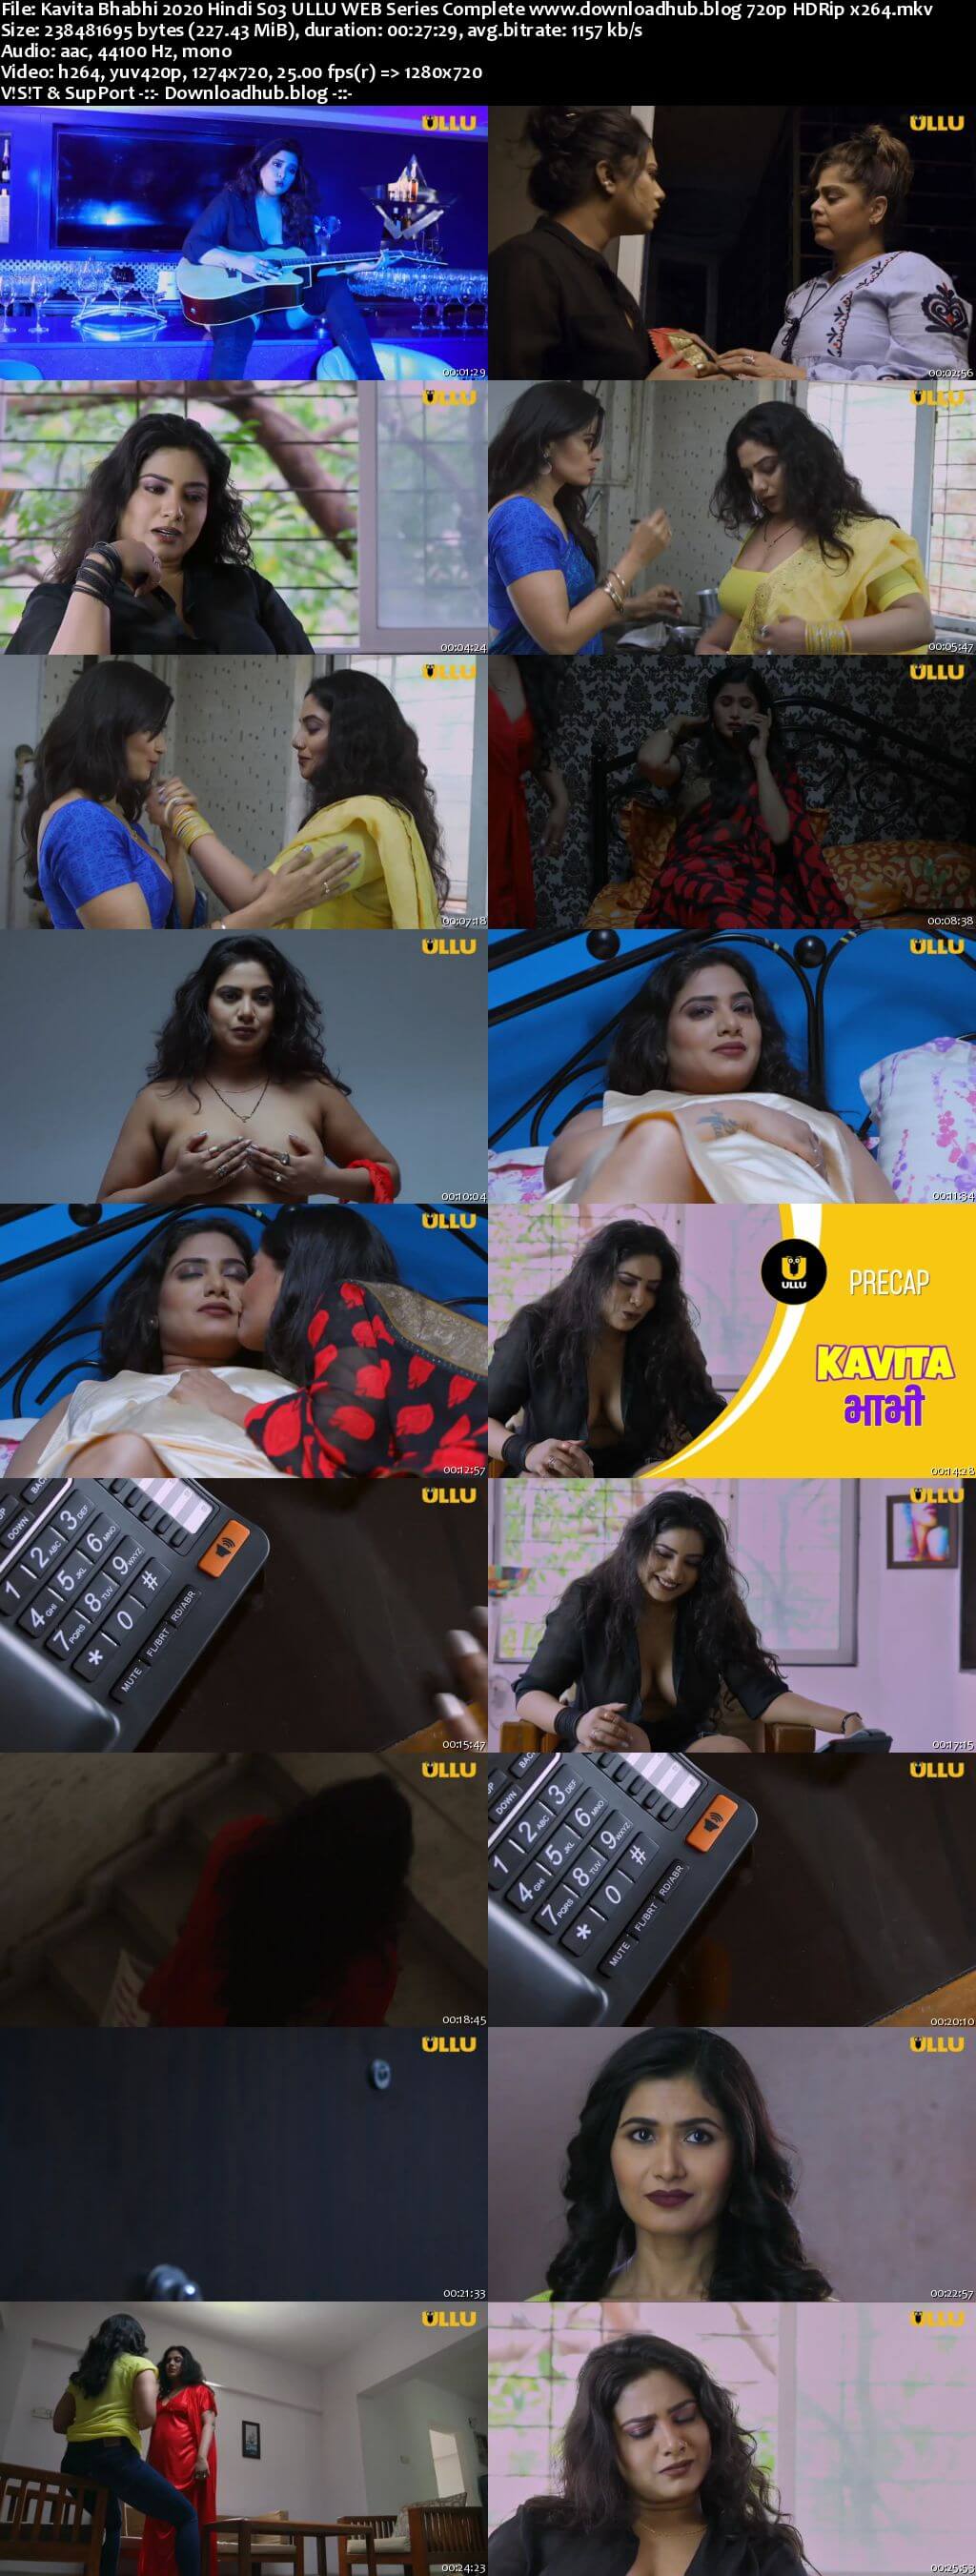 Kavita Bhabhi 2020 Hindi S03 ULLU WEB Series Complete 720p HDRip x264